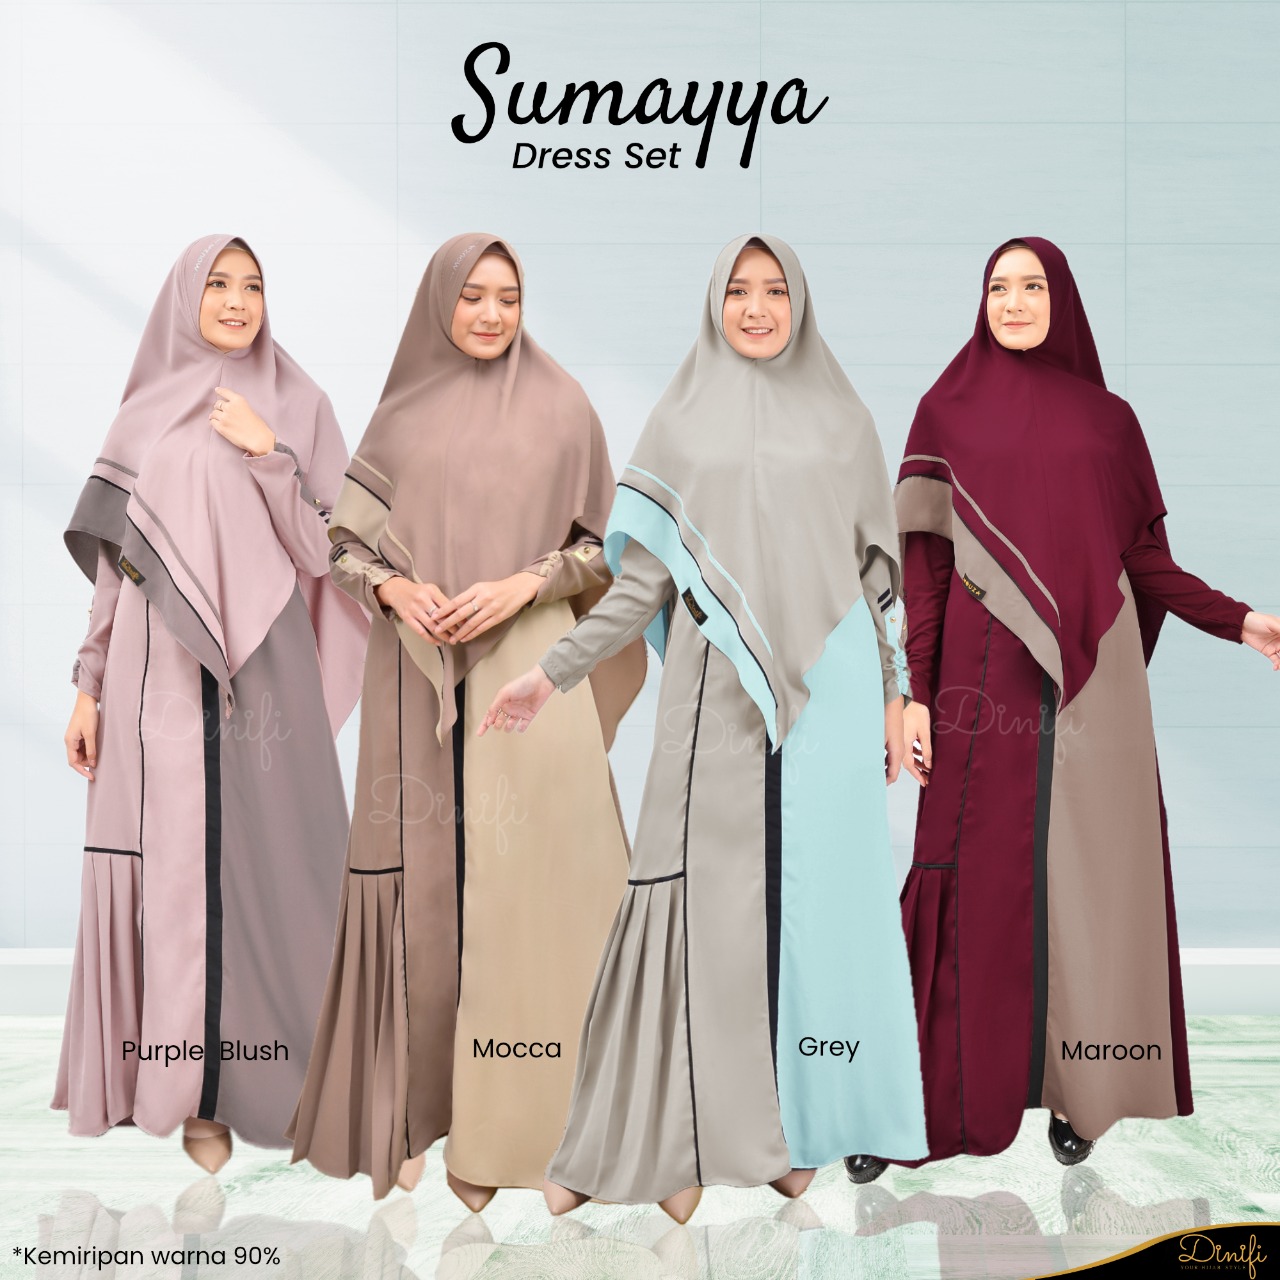 Sumayya Dress